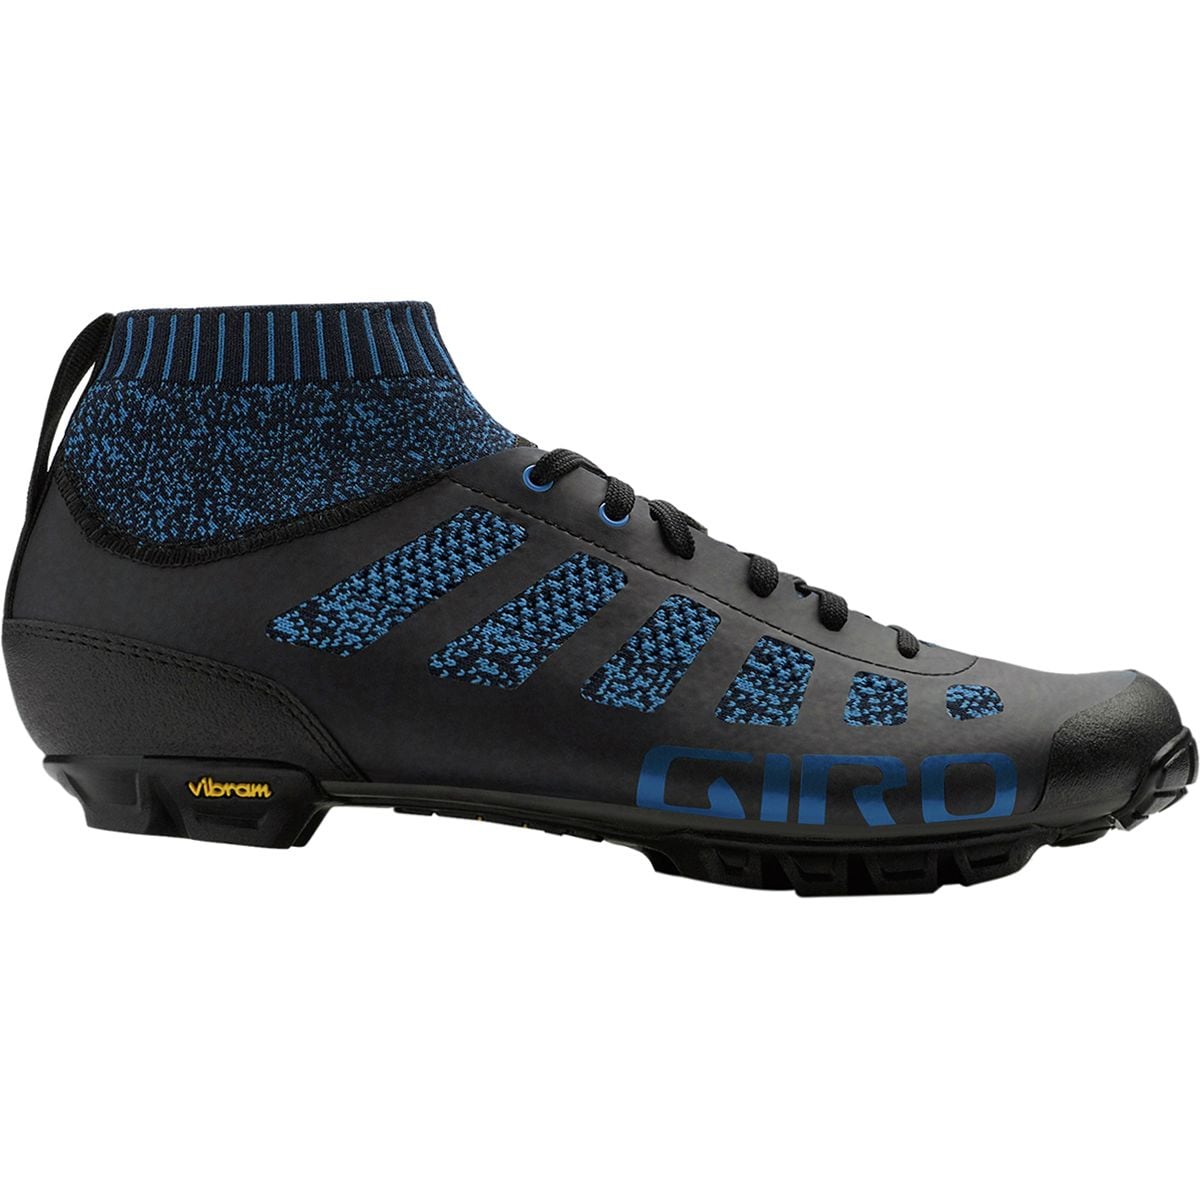 Giro Empire VR70 Knit Cycling Shoe - Men's Midnight/Blue, 47.0